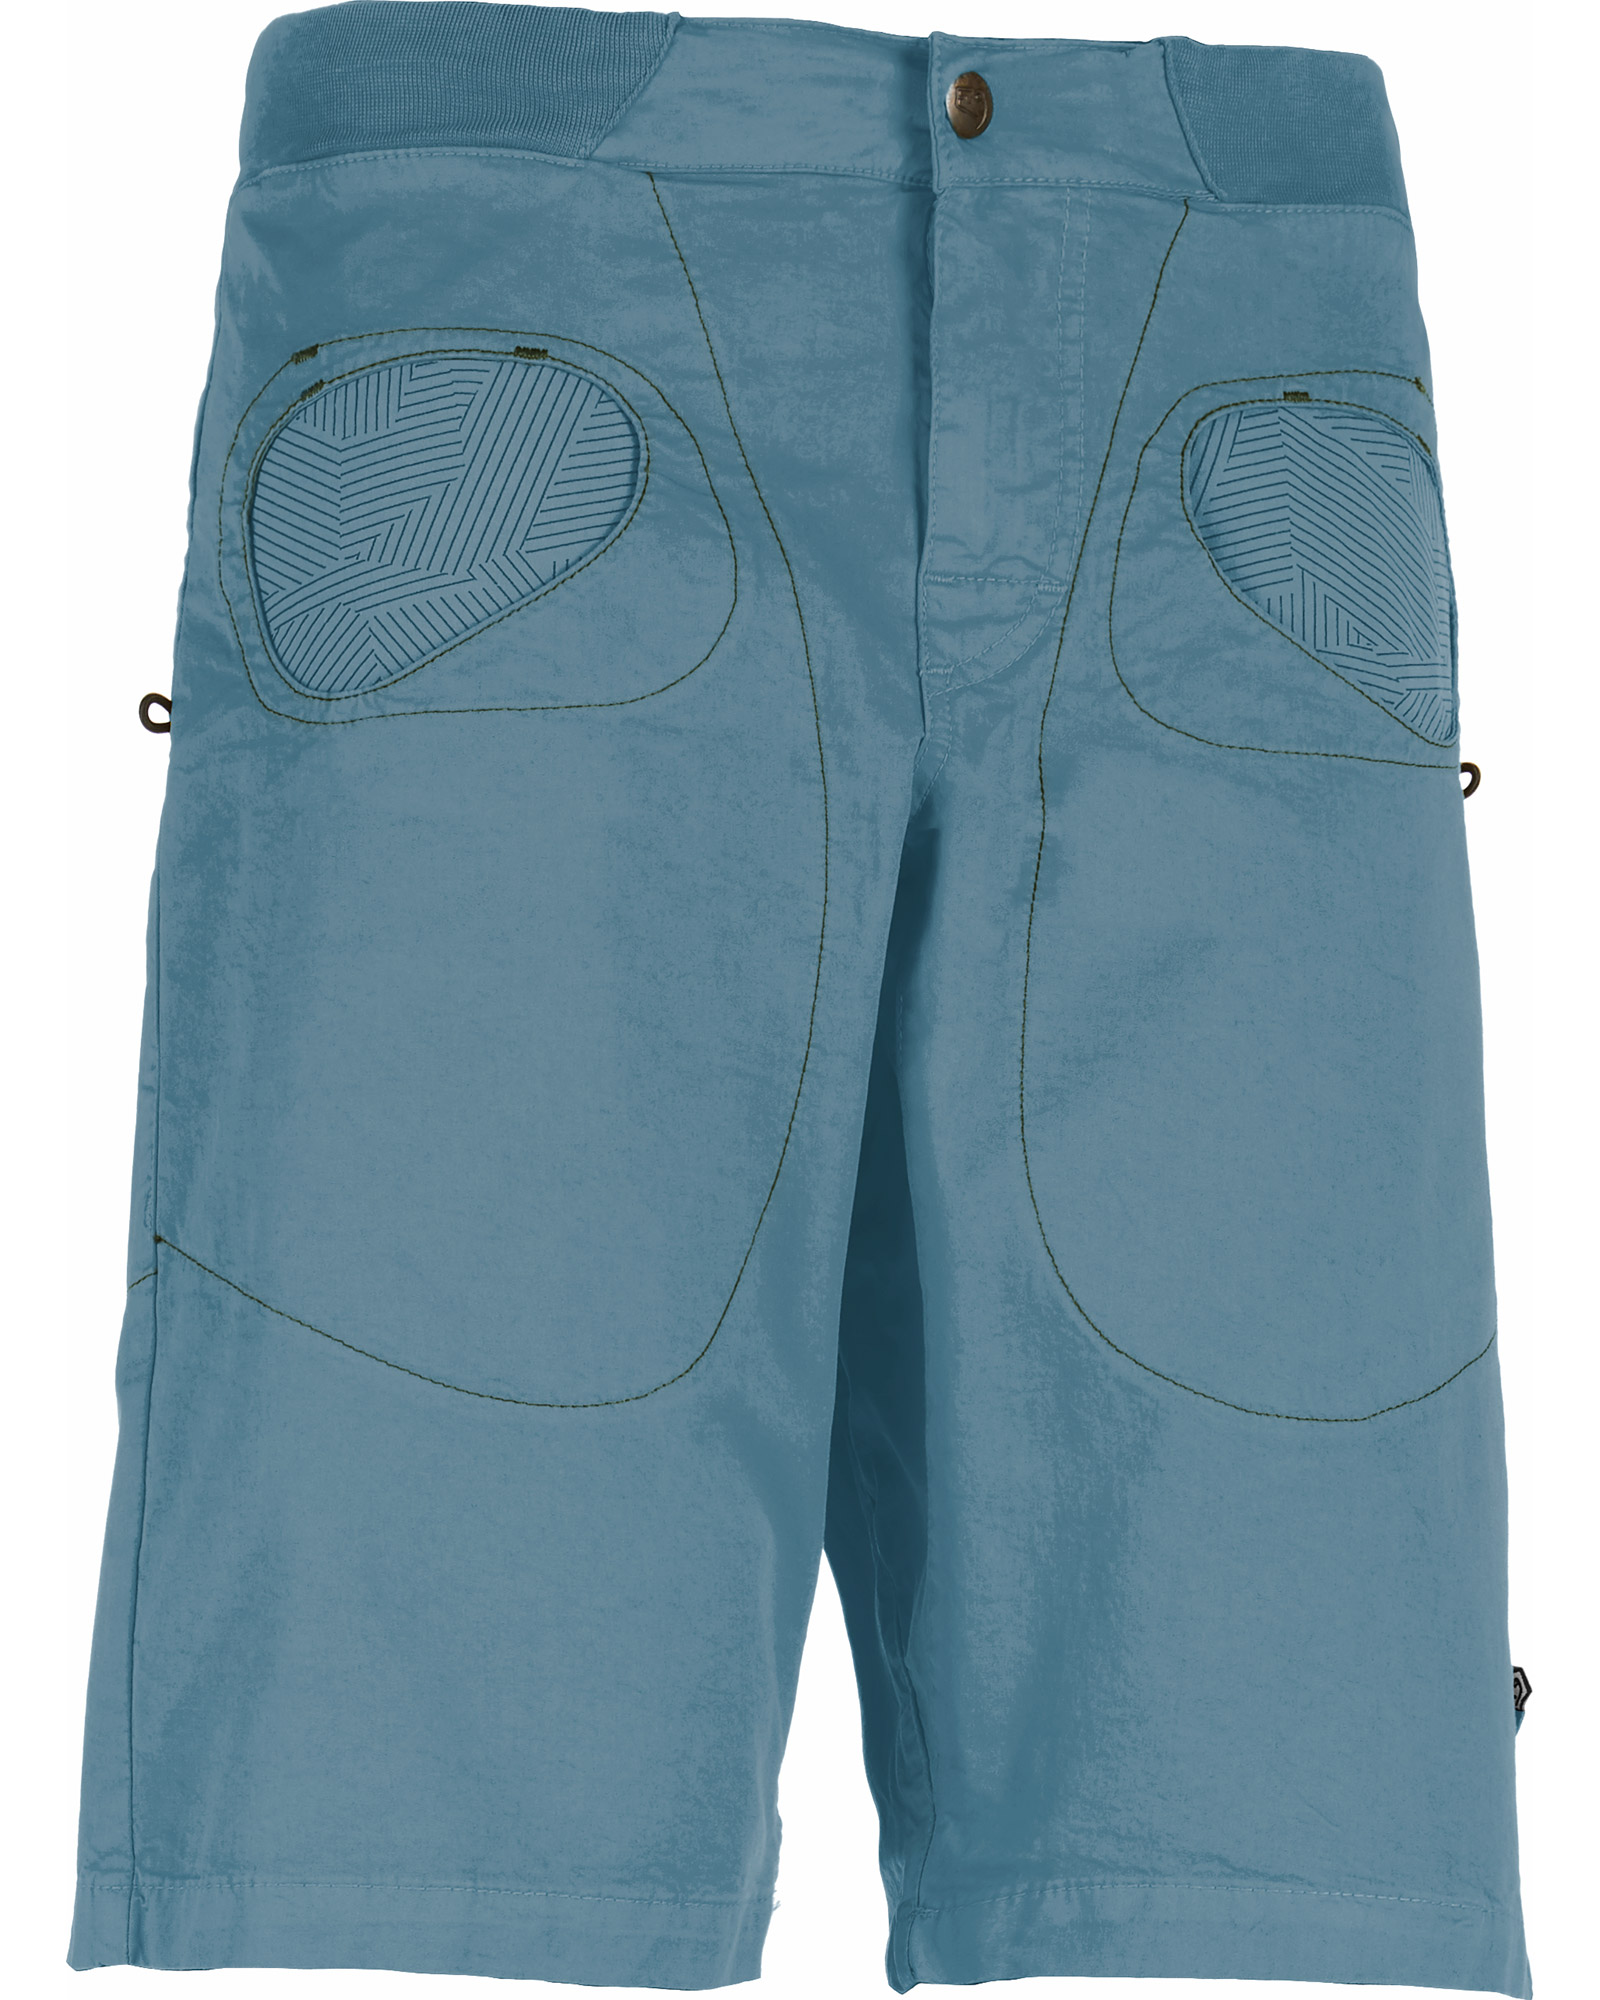 E9 Rondo Men’s Shorts - Dust S